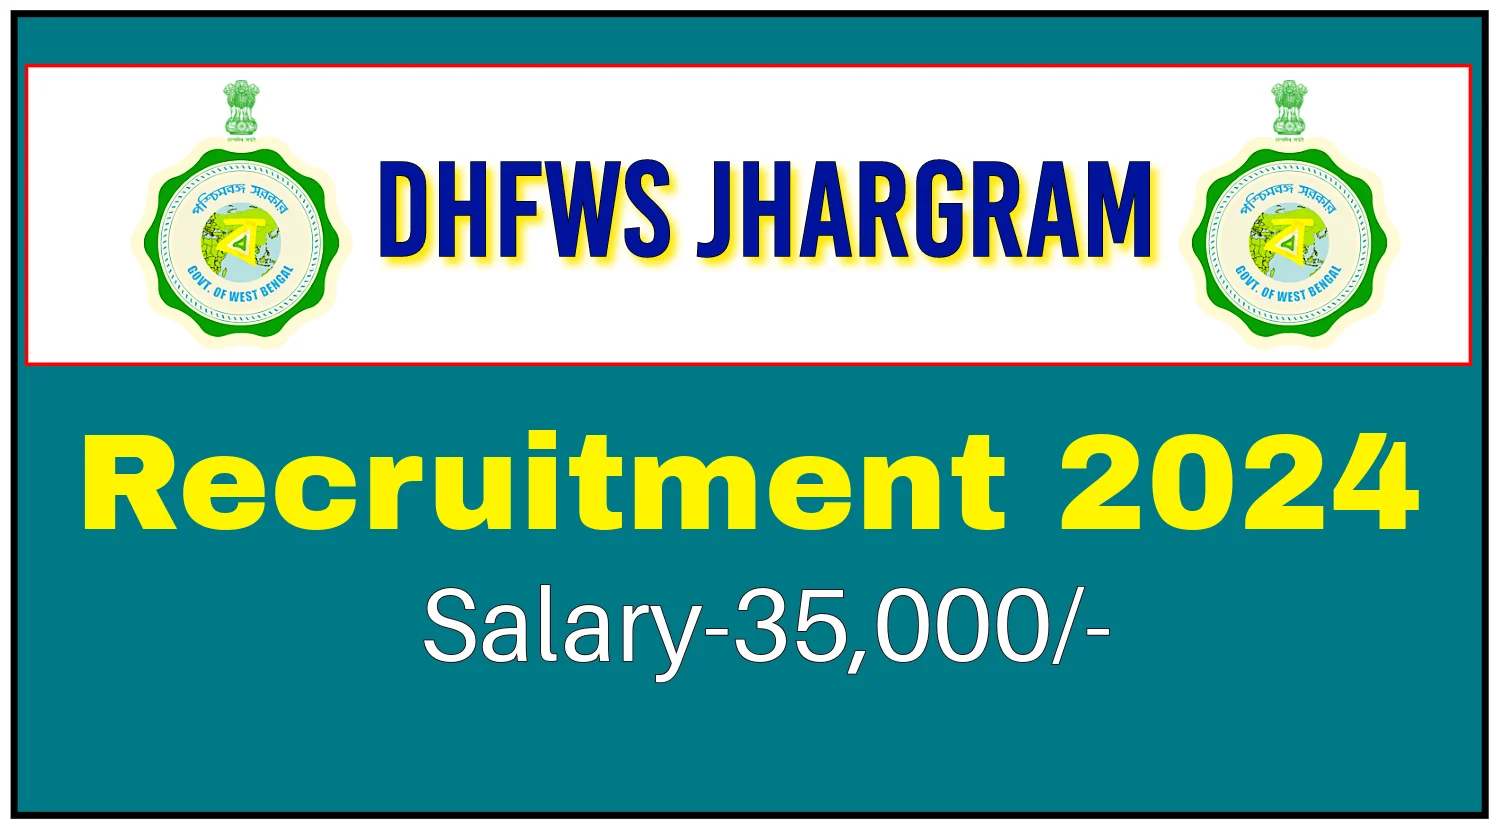 DHFWS Jhargram Recruitment 2024